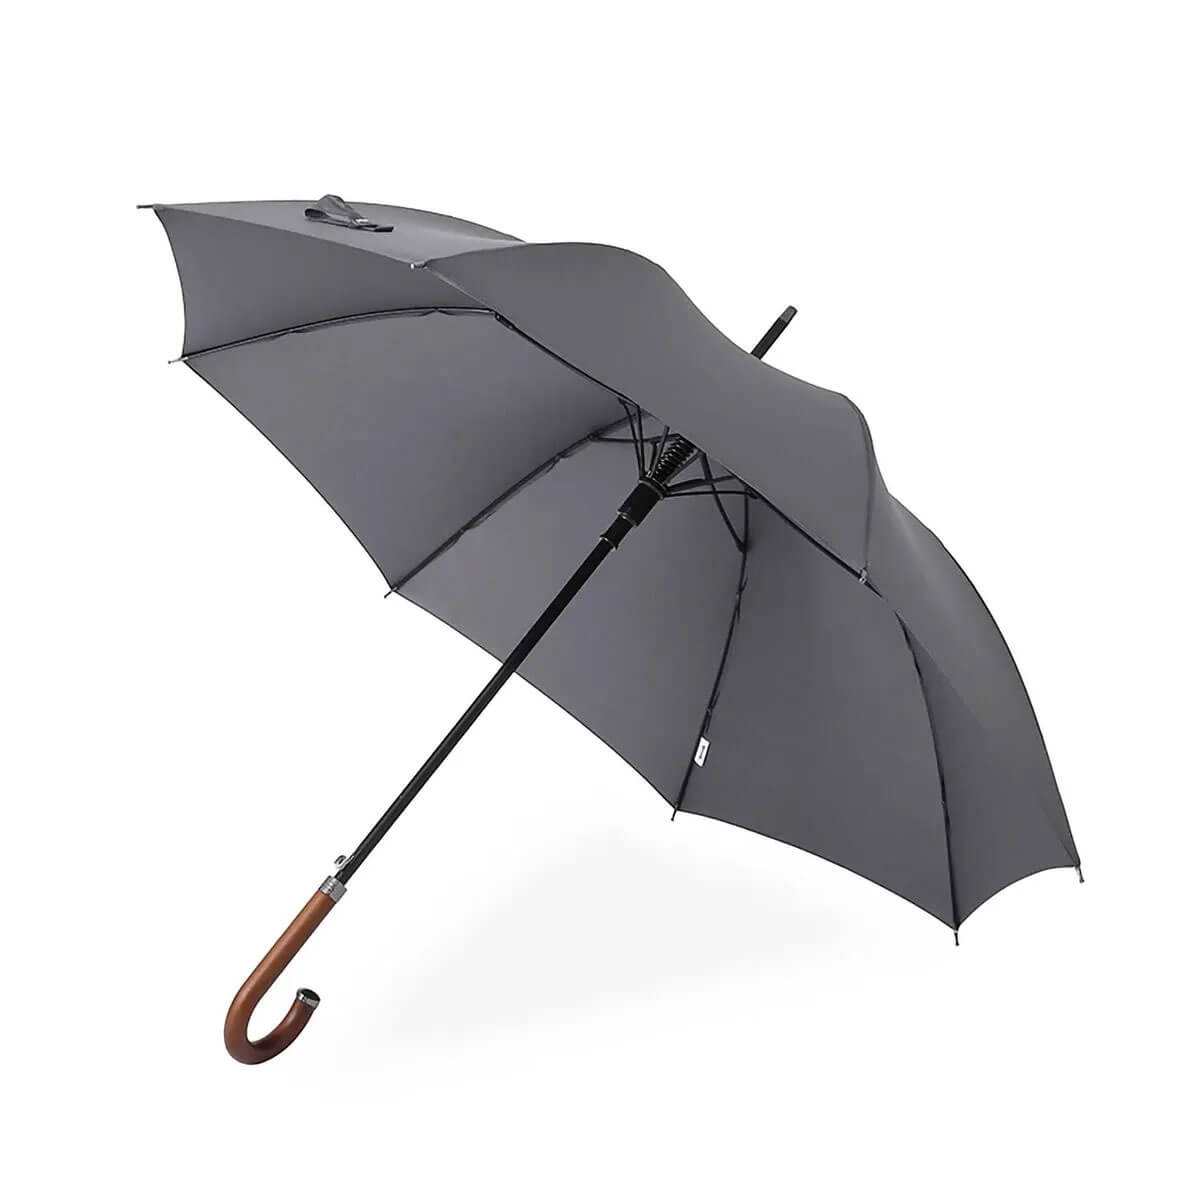 Whimsical Travel Umbrella in Grey